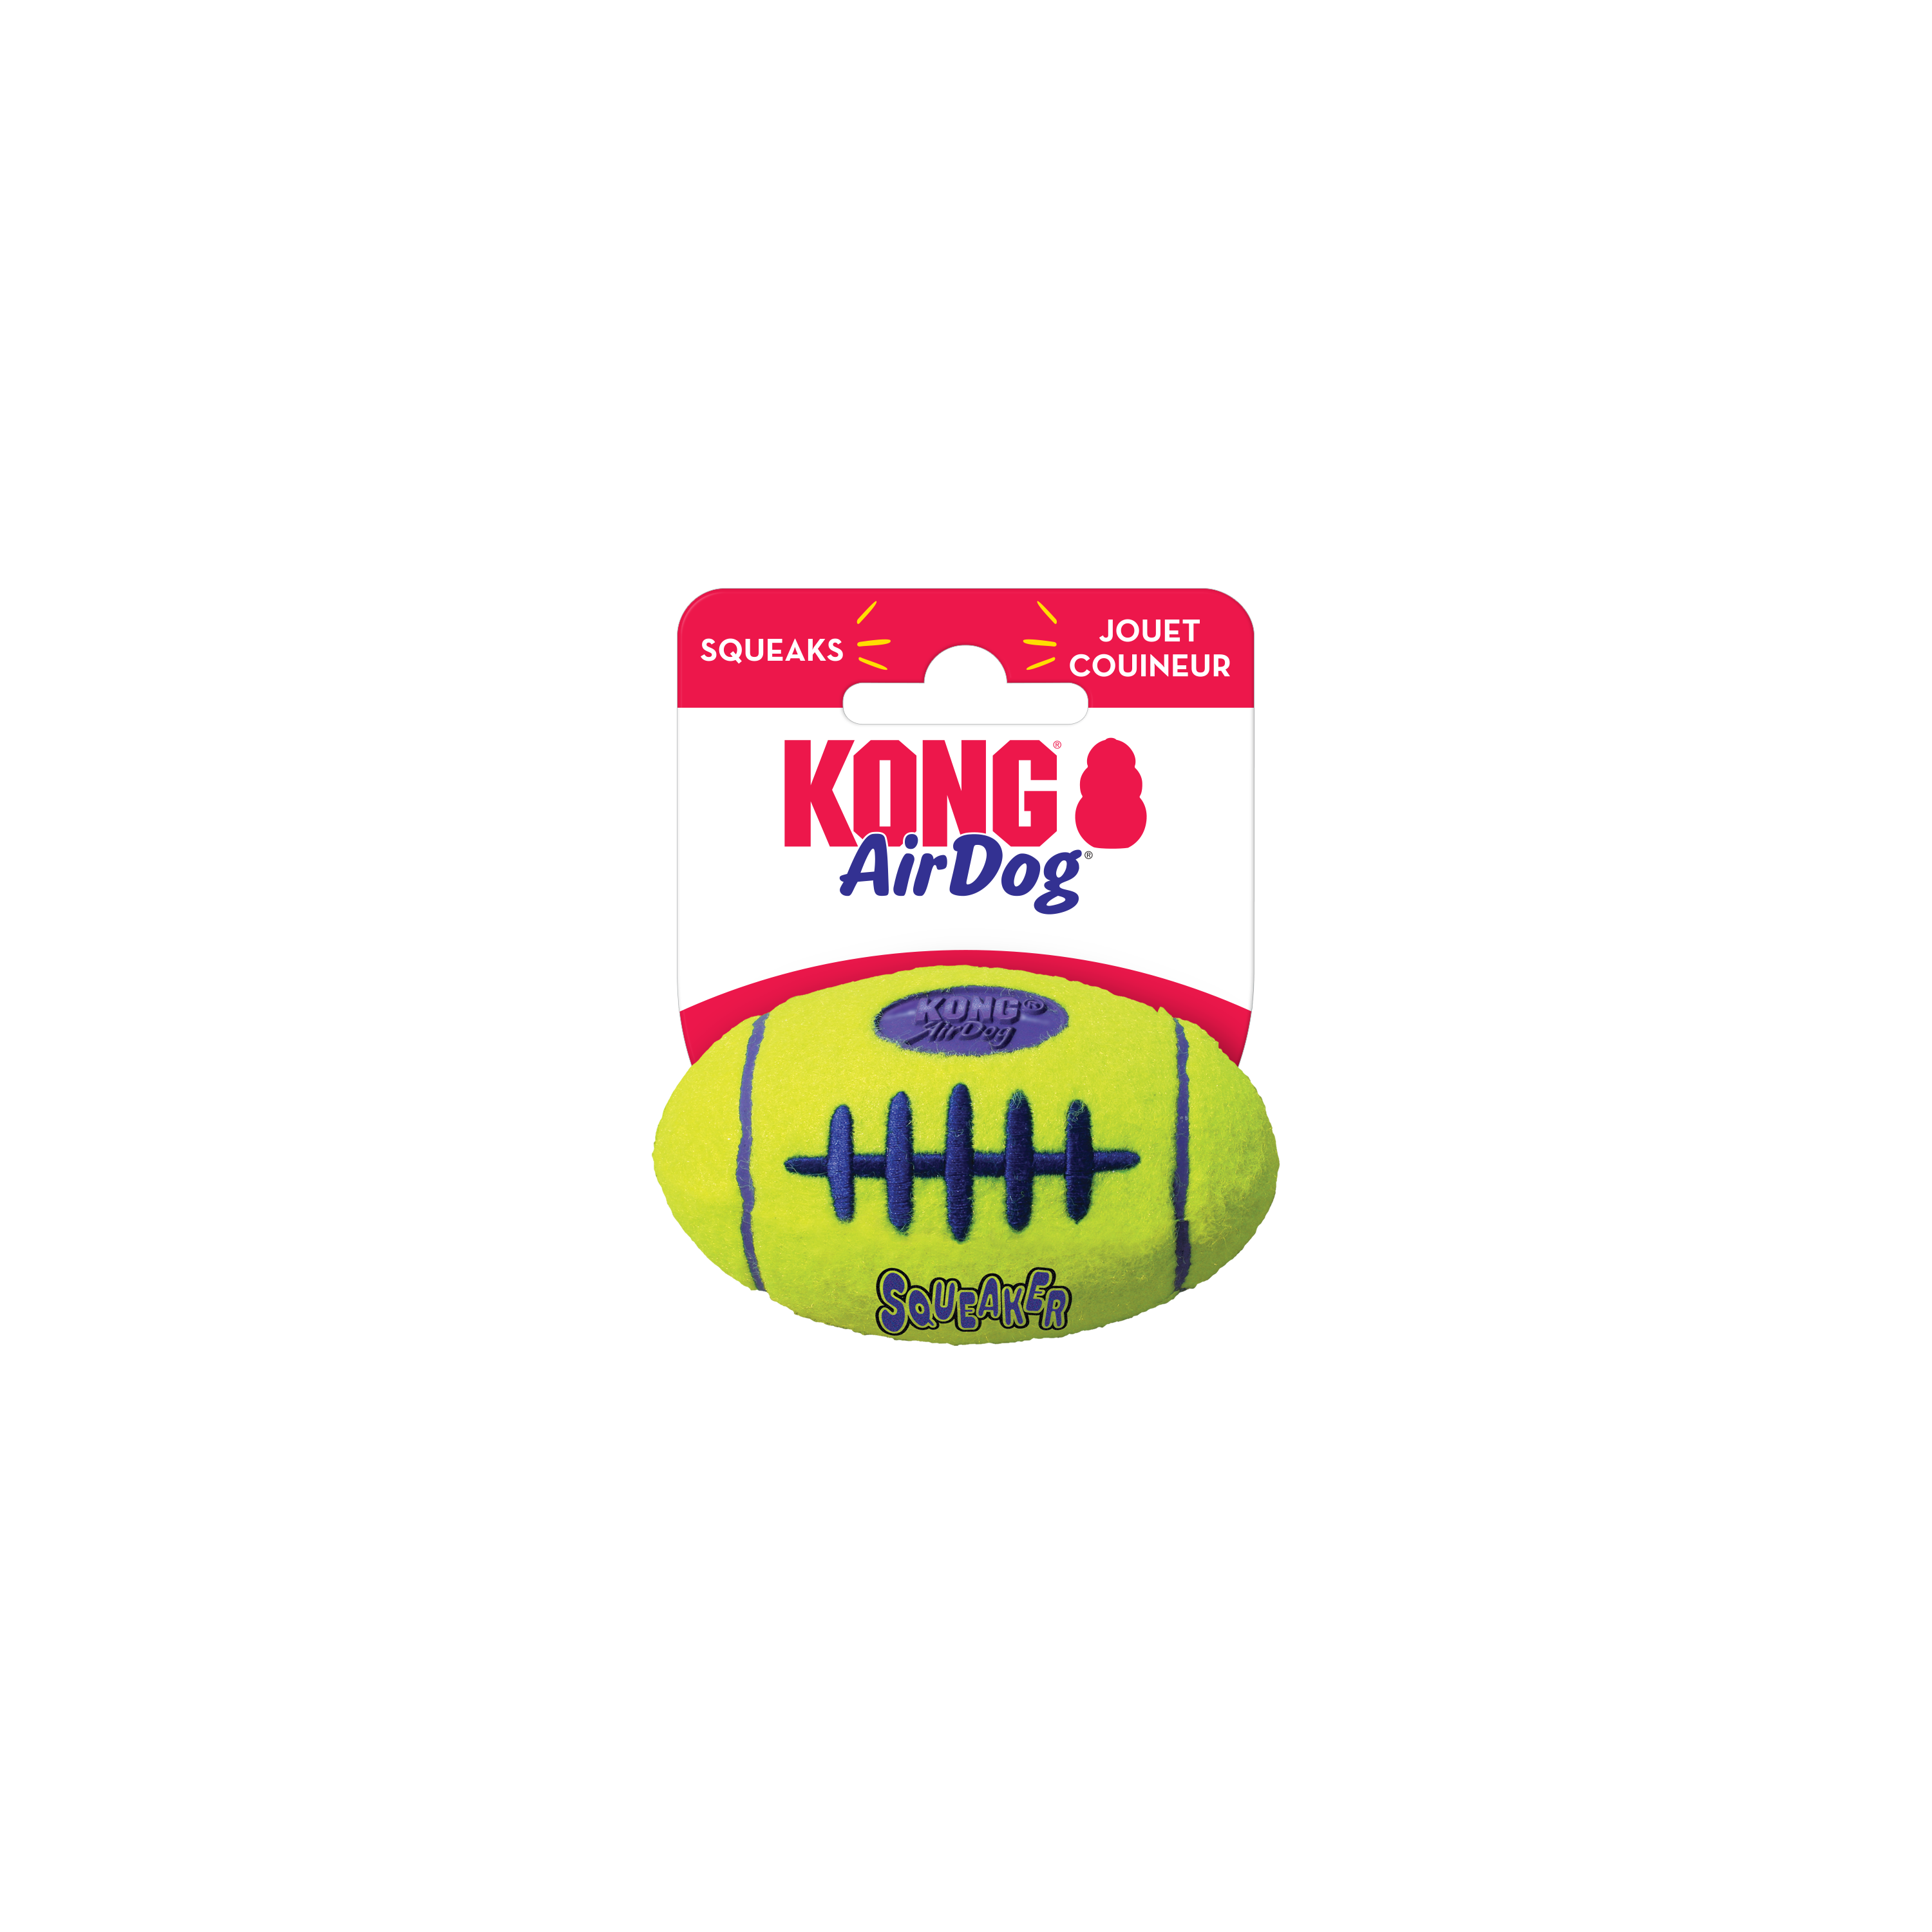 AirDog Squeaker Football onpack image du produit